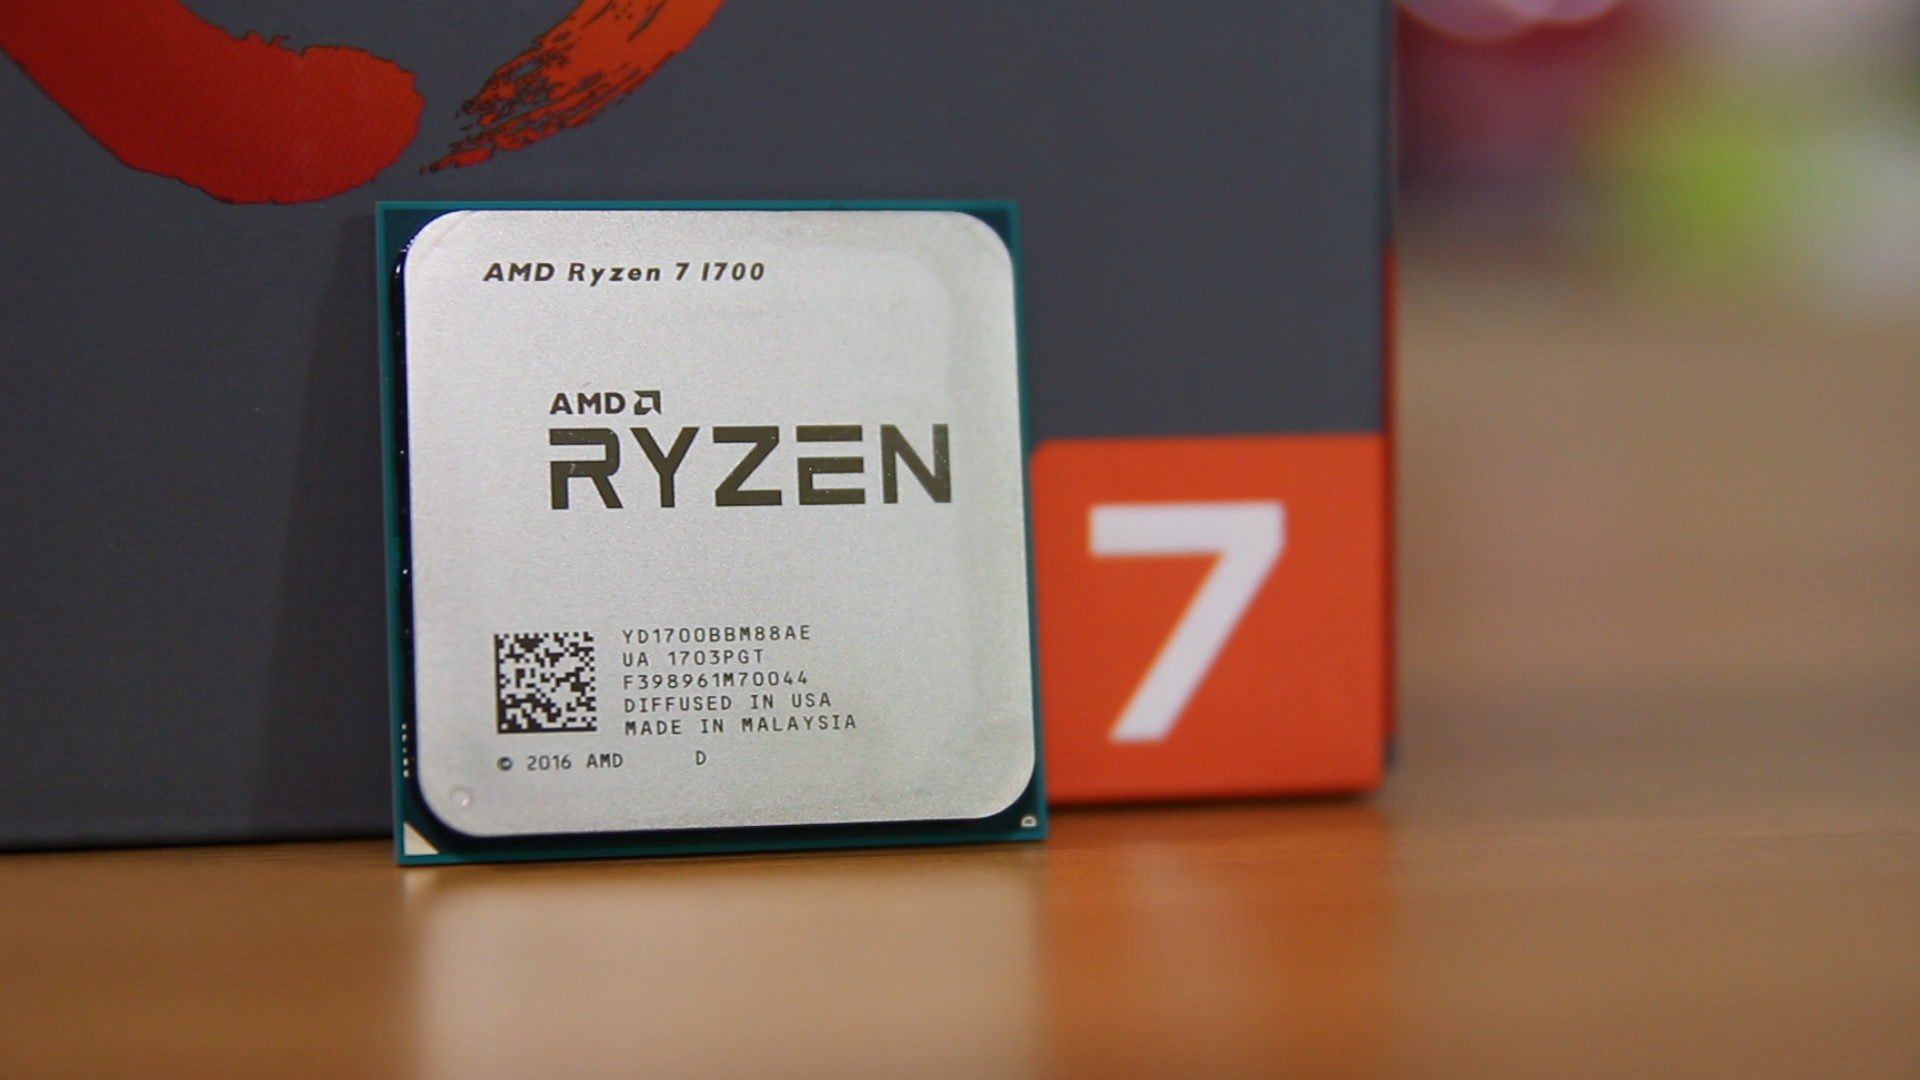 Ryzen 7 pro купить. AMD Ryzen 7 1700. AМD Ryzеn 7. Процессор AMD Ryzen 7 1700x. Процессор Ryzen 1800x.